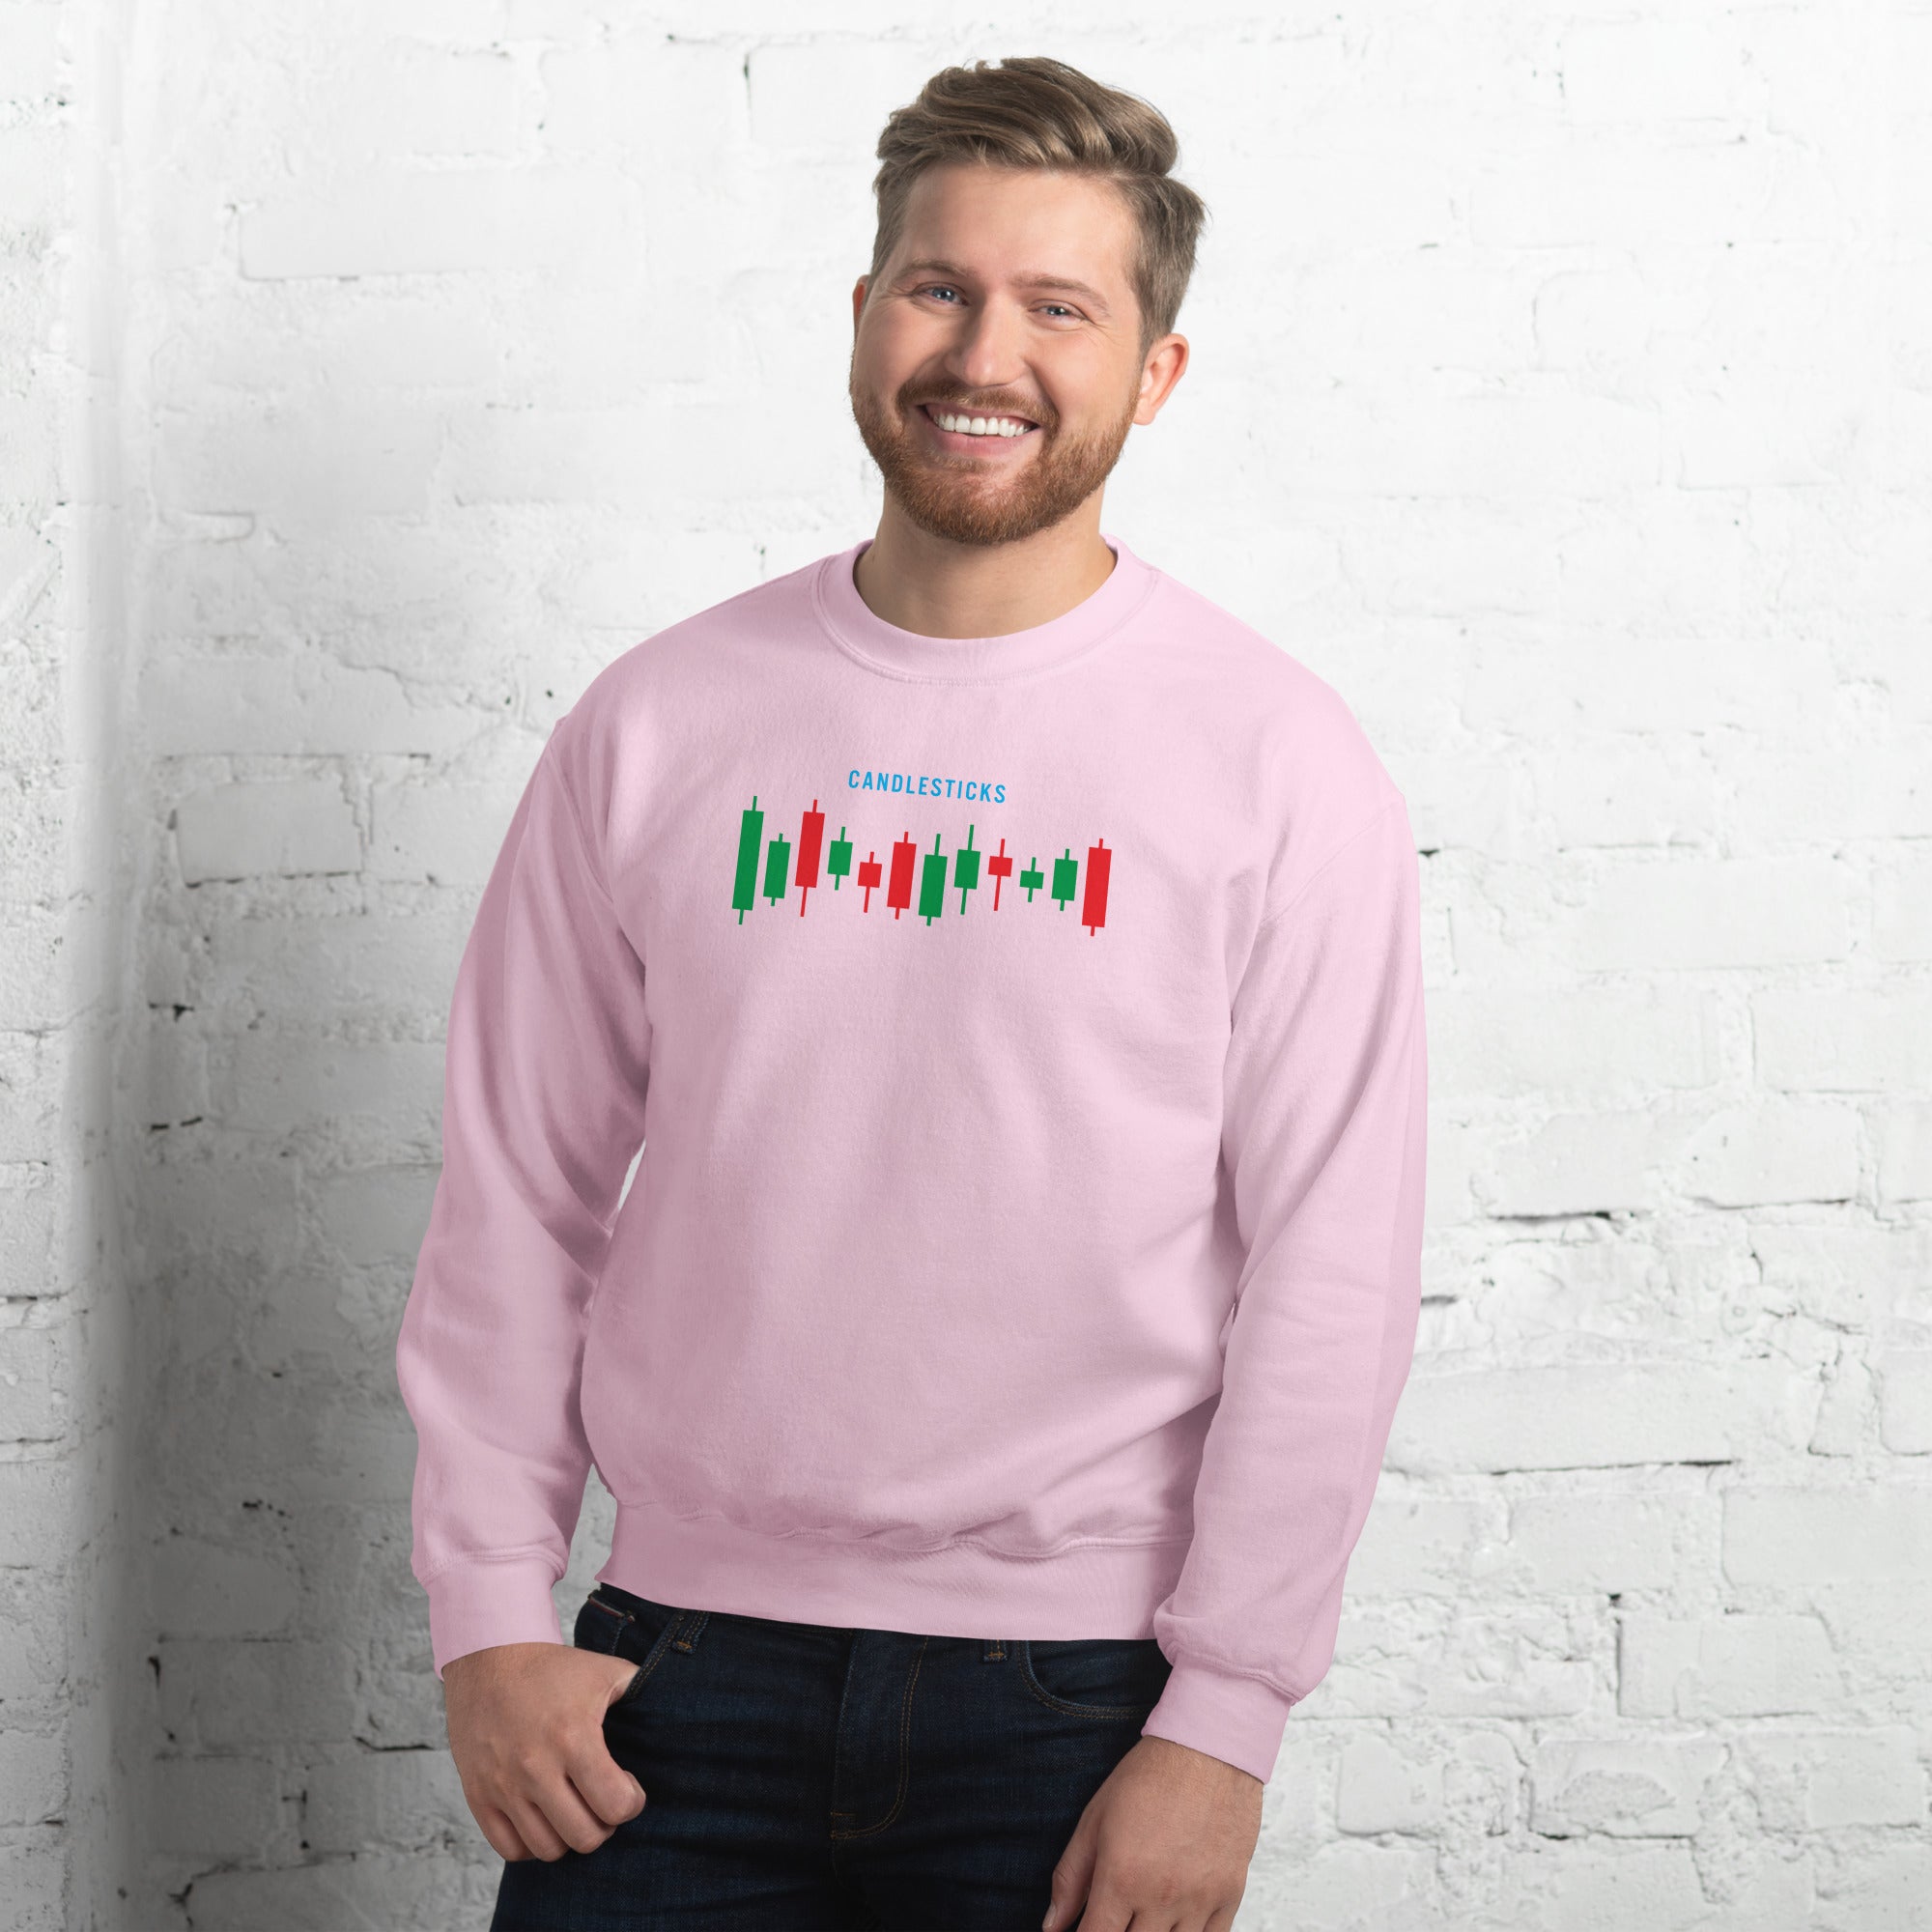 Buy light-pink Unisex Sweatshirt - Candlesticks